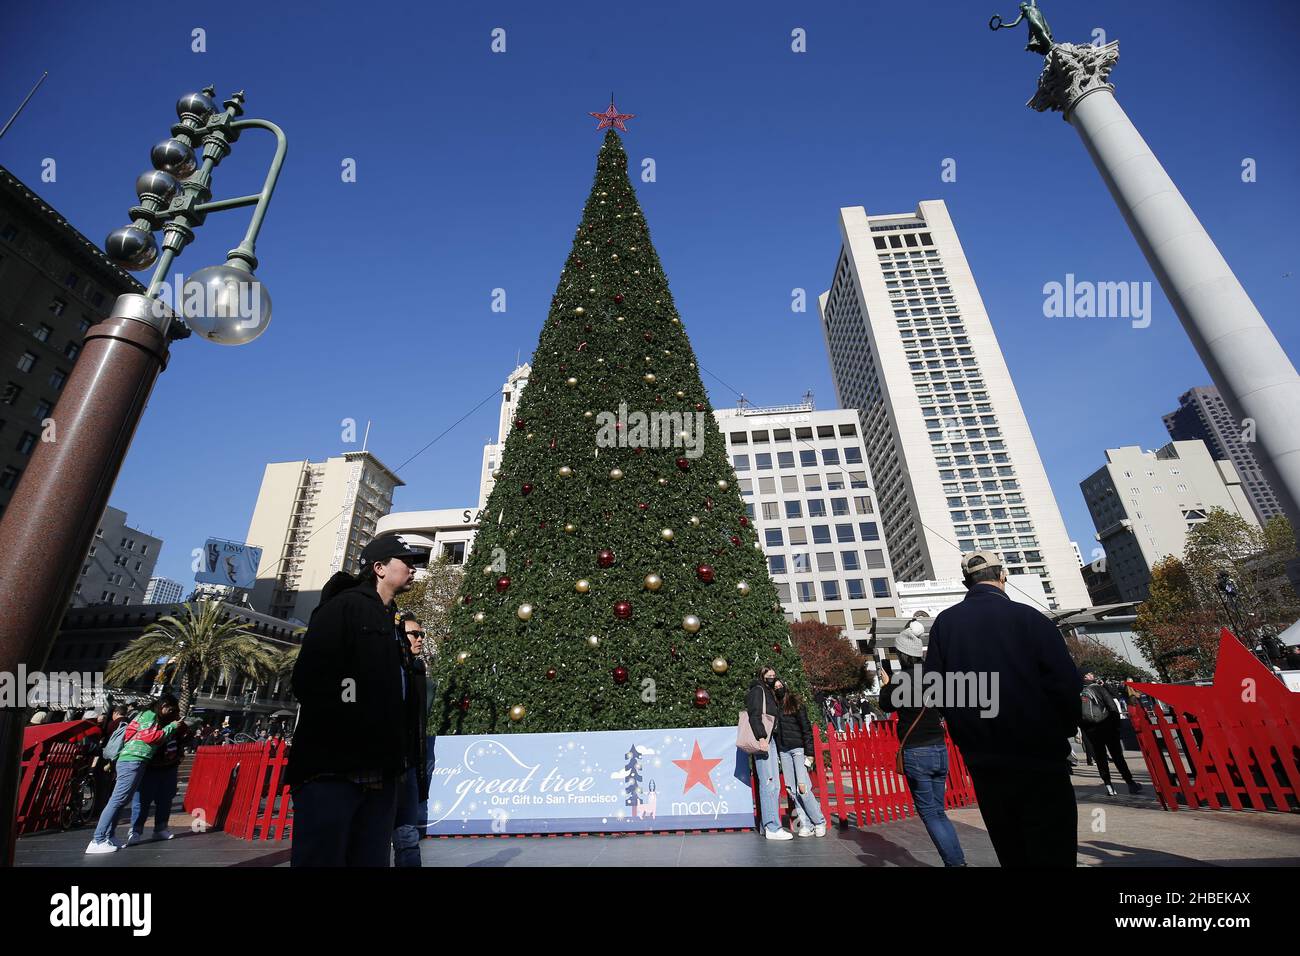 San Francisco's Union Square at Christmas: Photo Tour